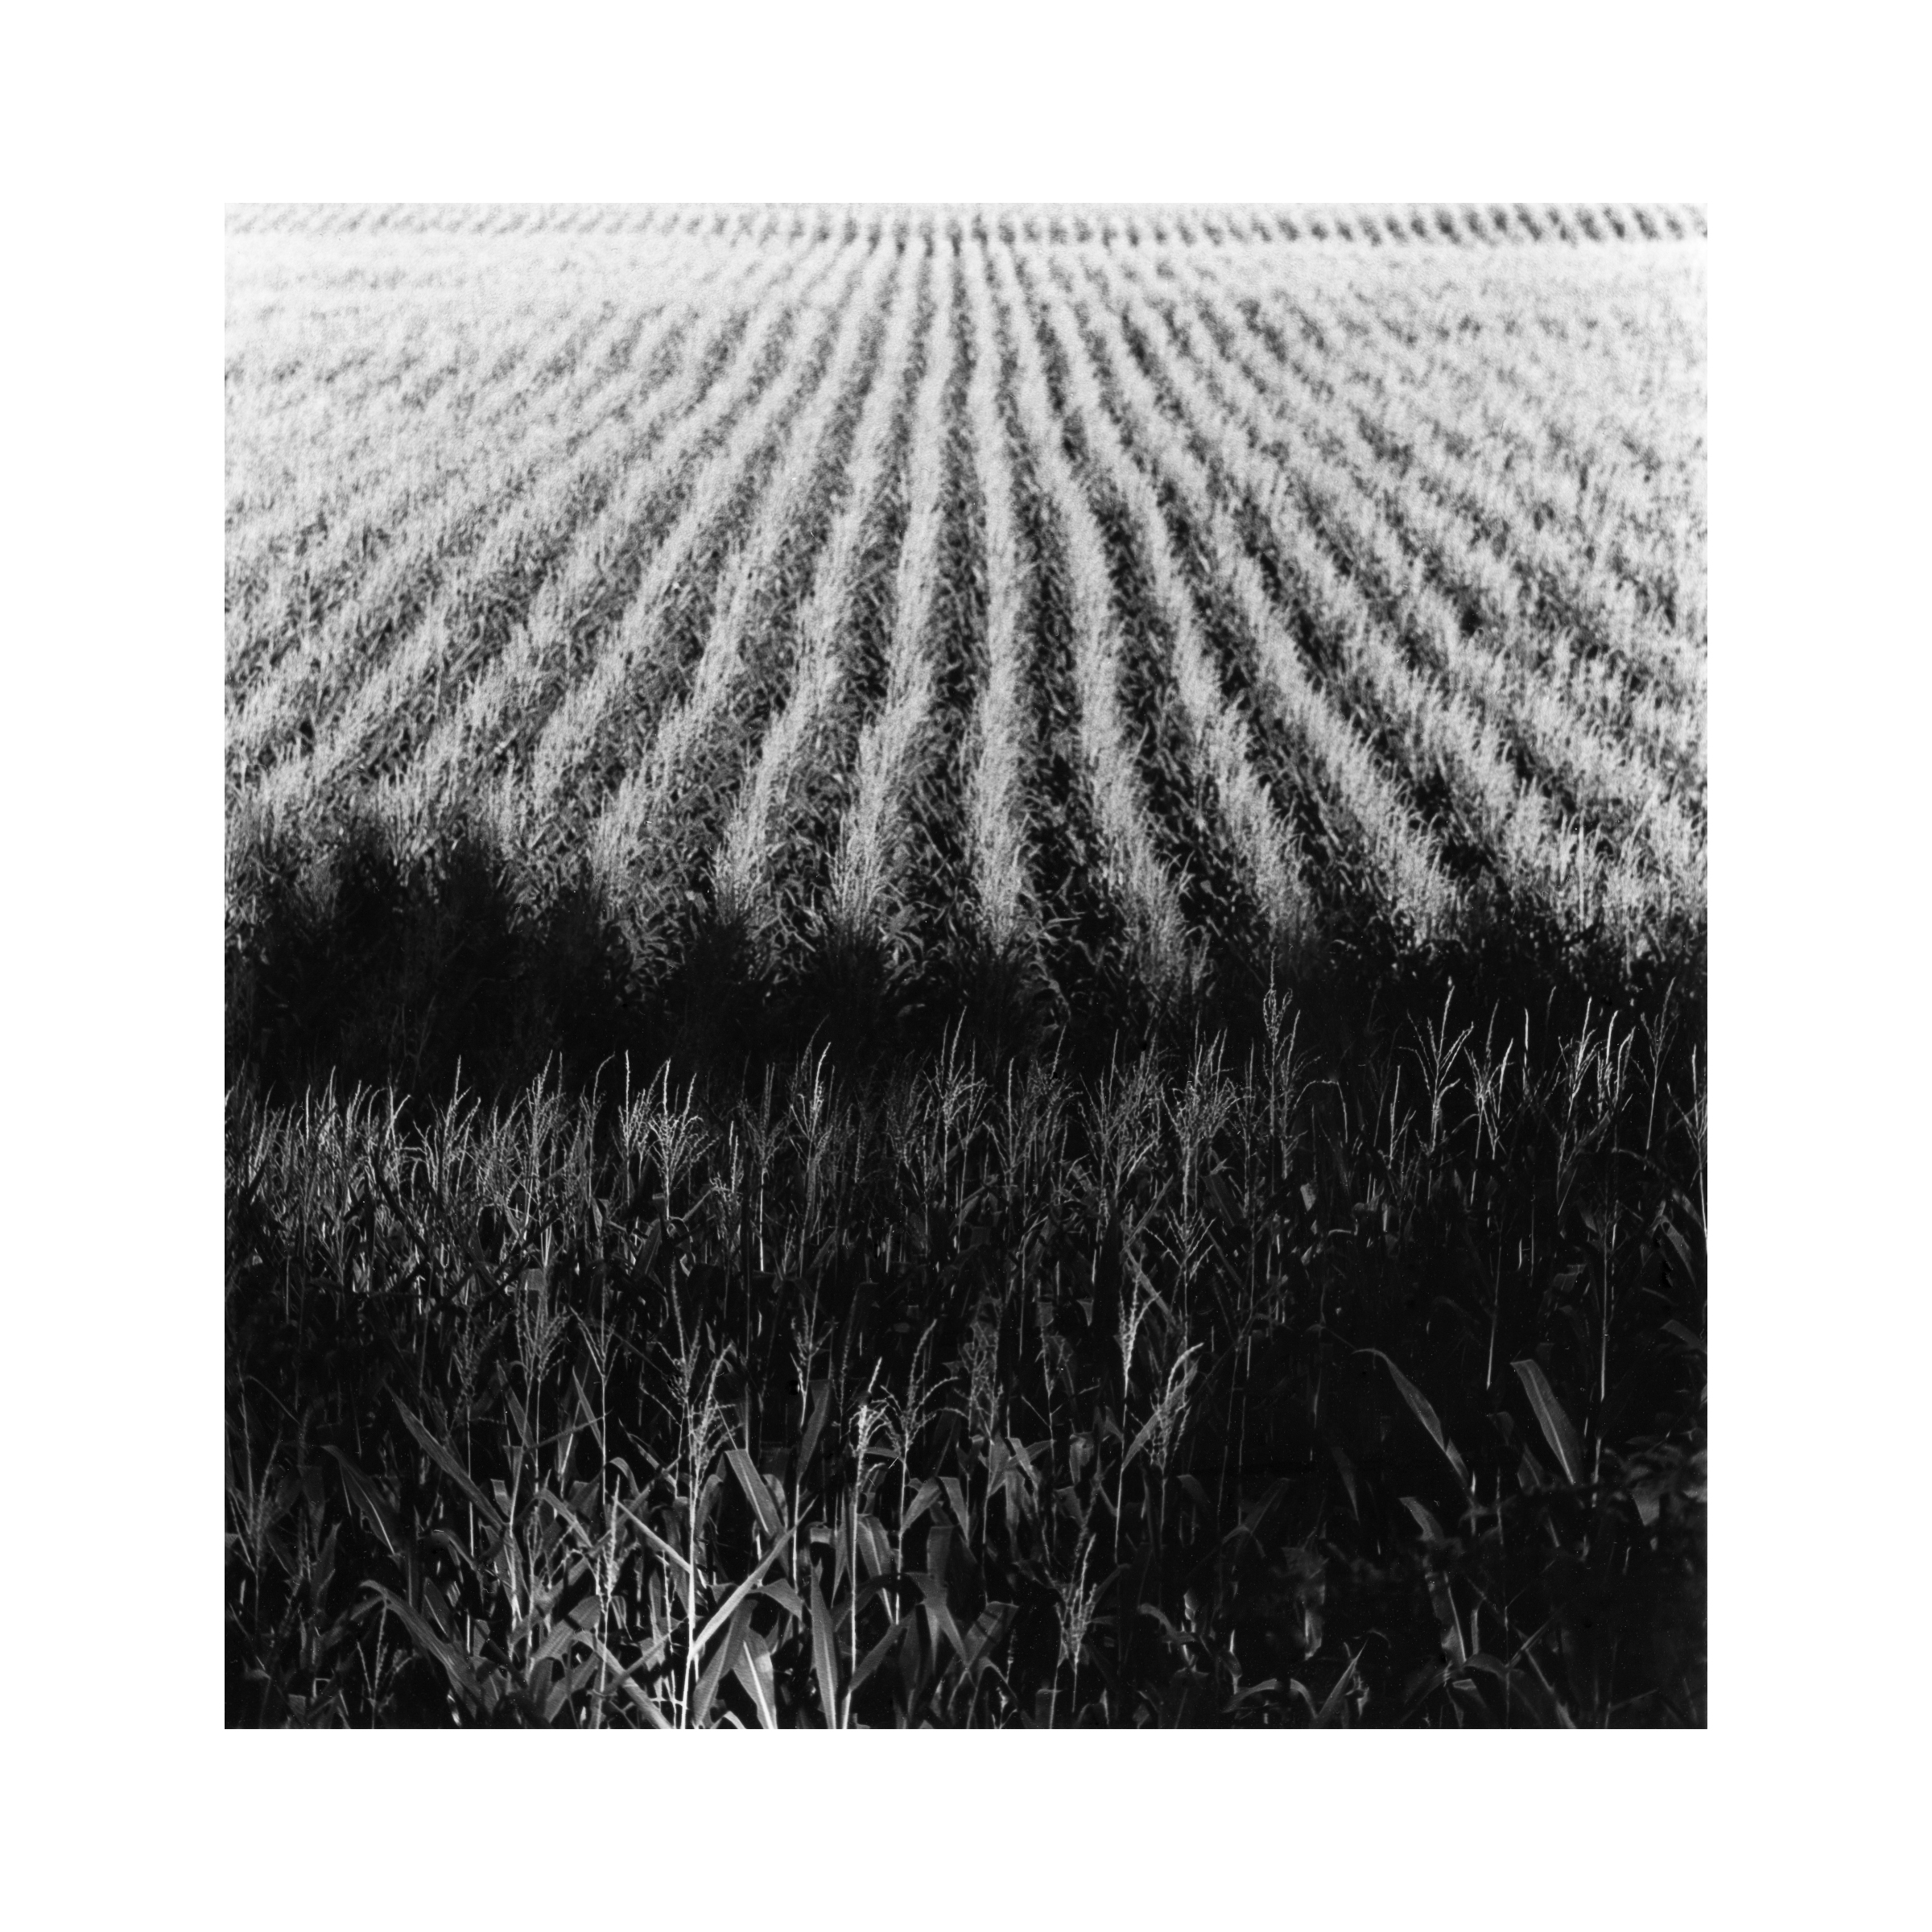 corn field 2.jpg